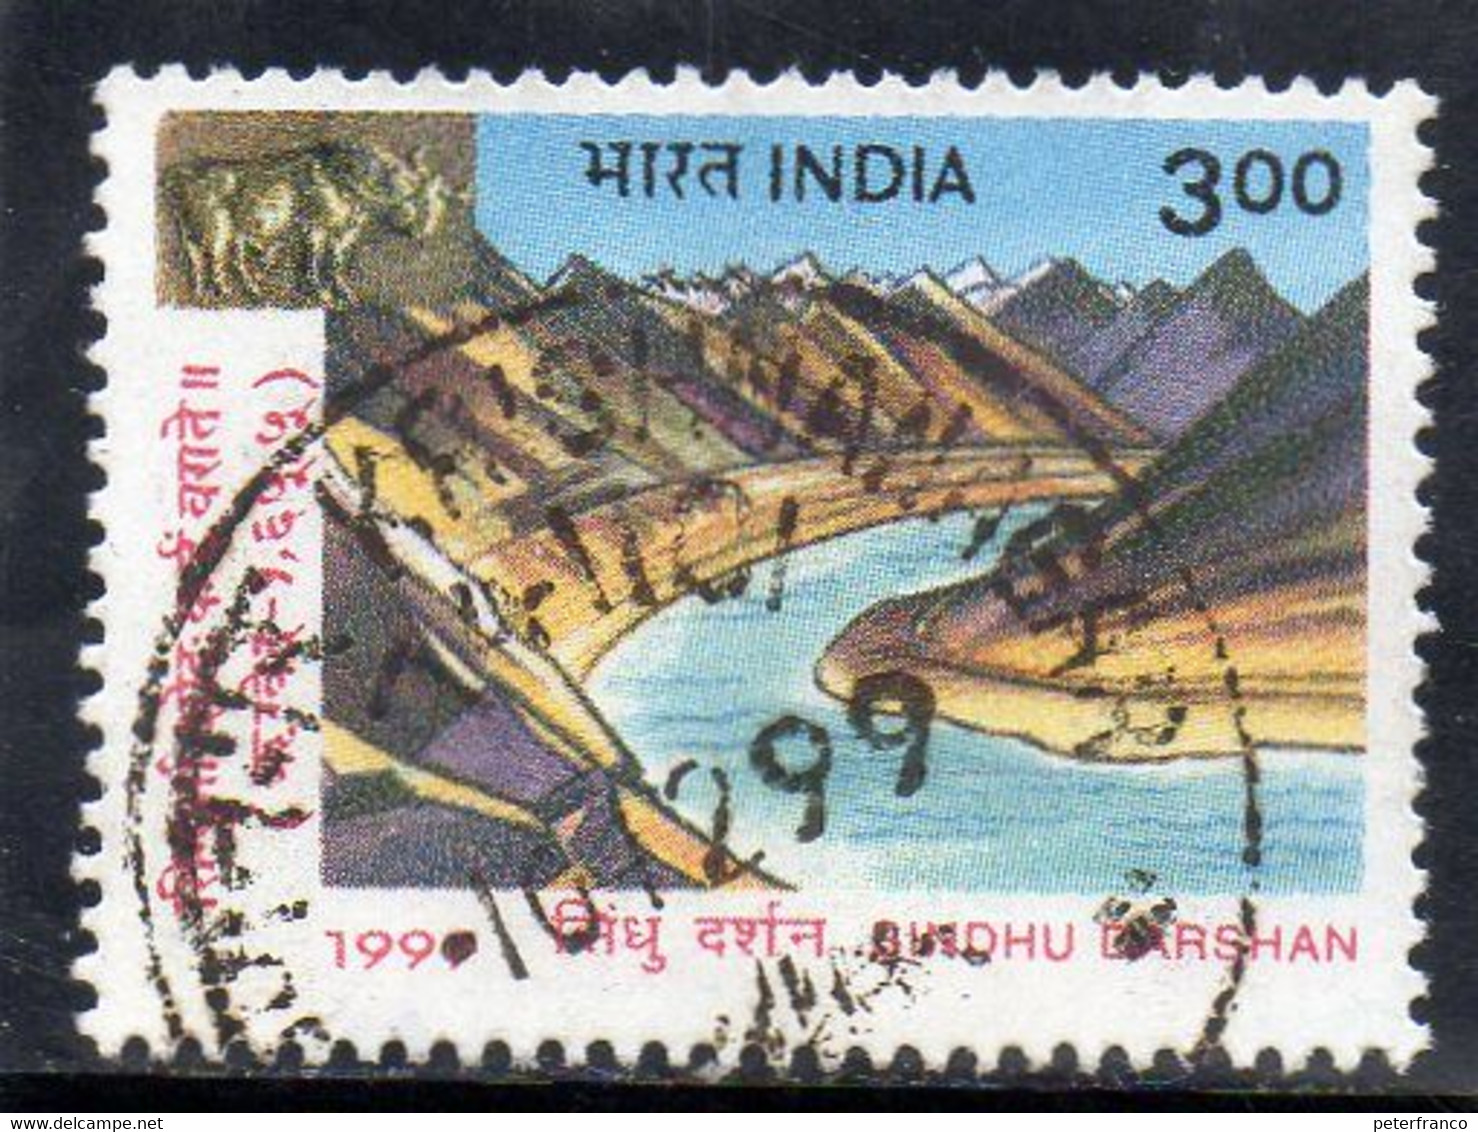 1999 India - Sindhu Darshan Festival - Usati